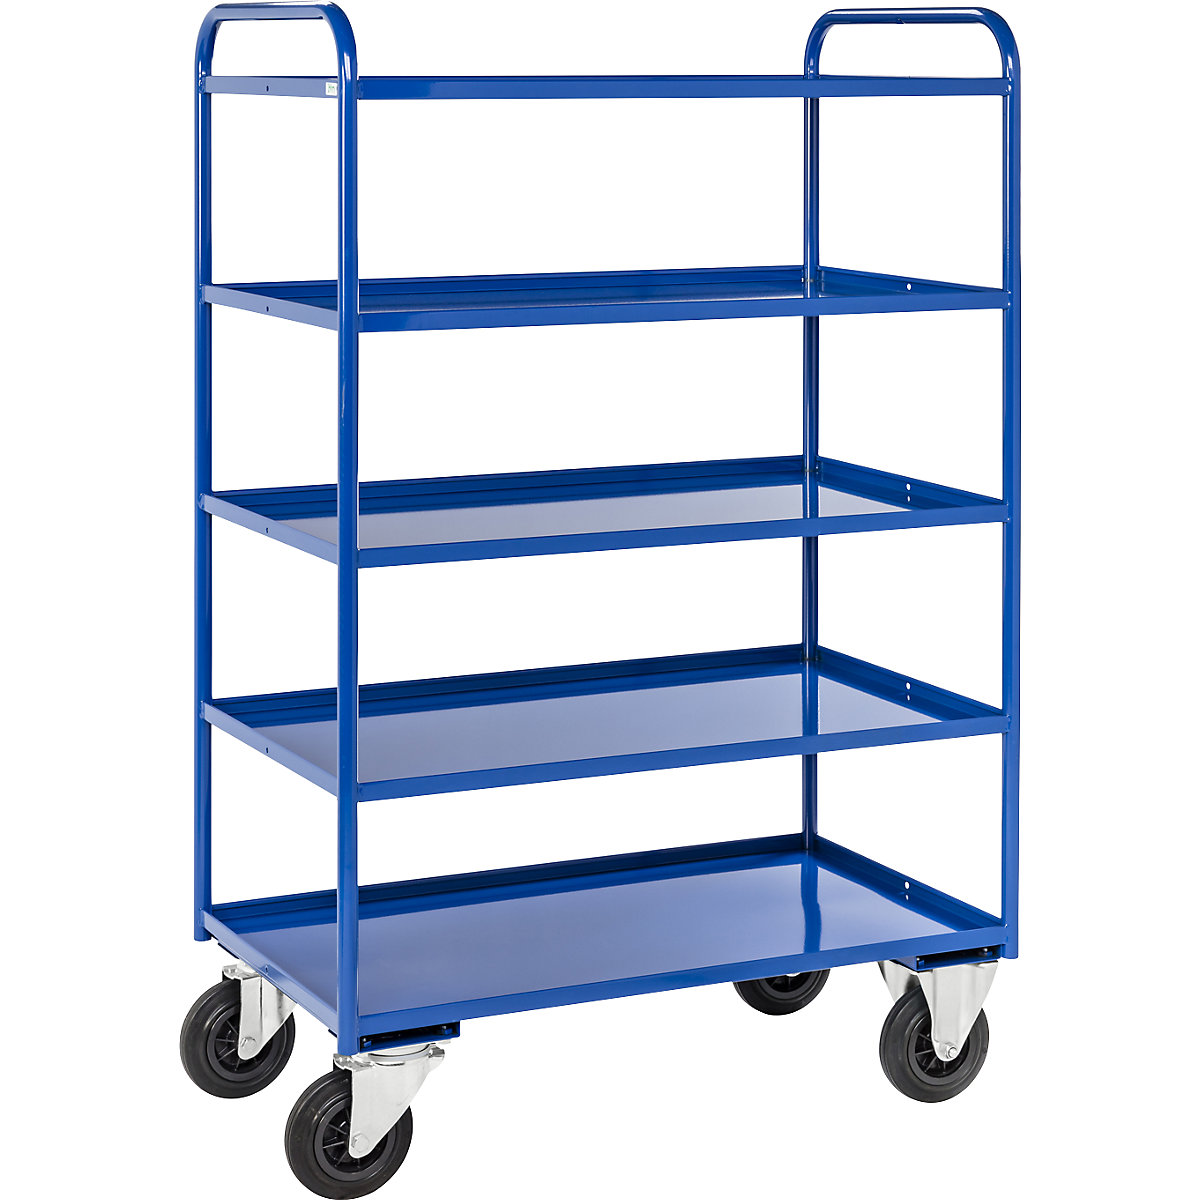 KM41 shelf truck – Kongamek, 5 shelves with raised edges, LxWxH 955 x 550 x 1490 mm, blue, 2 swivel castors and 2 fixed castors, 5+ items-8